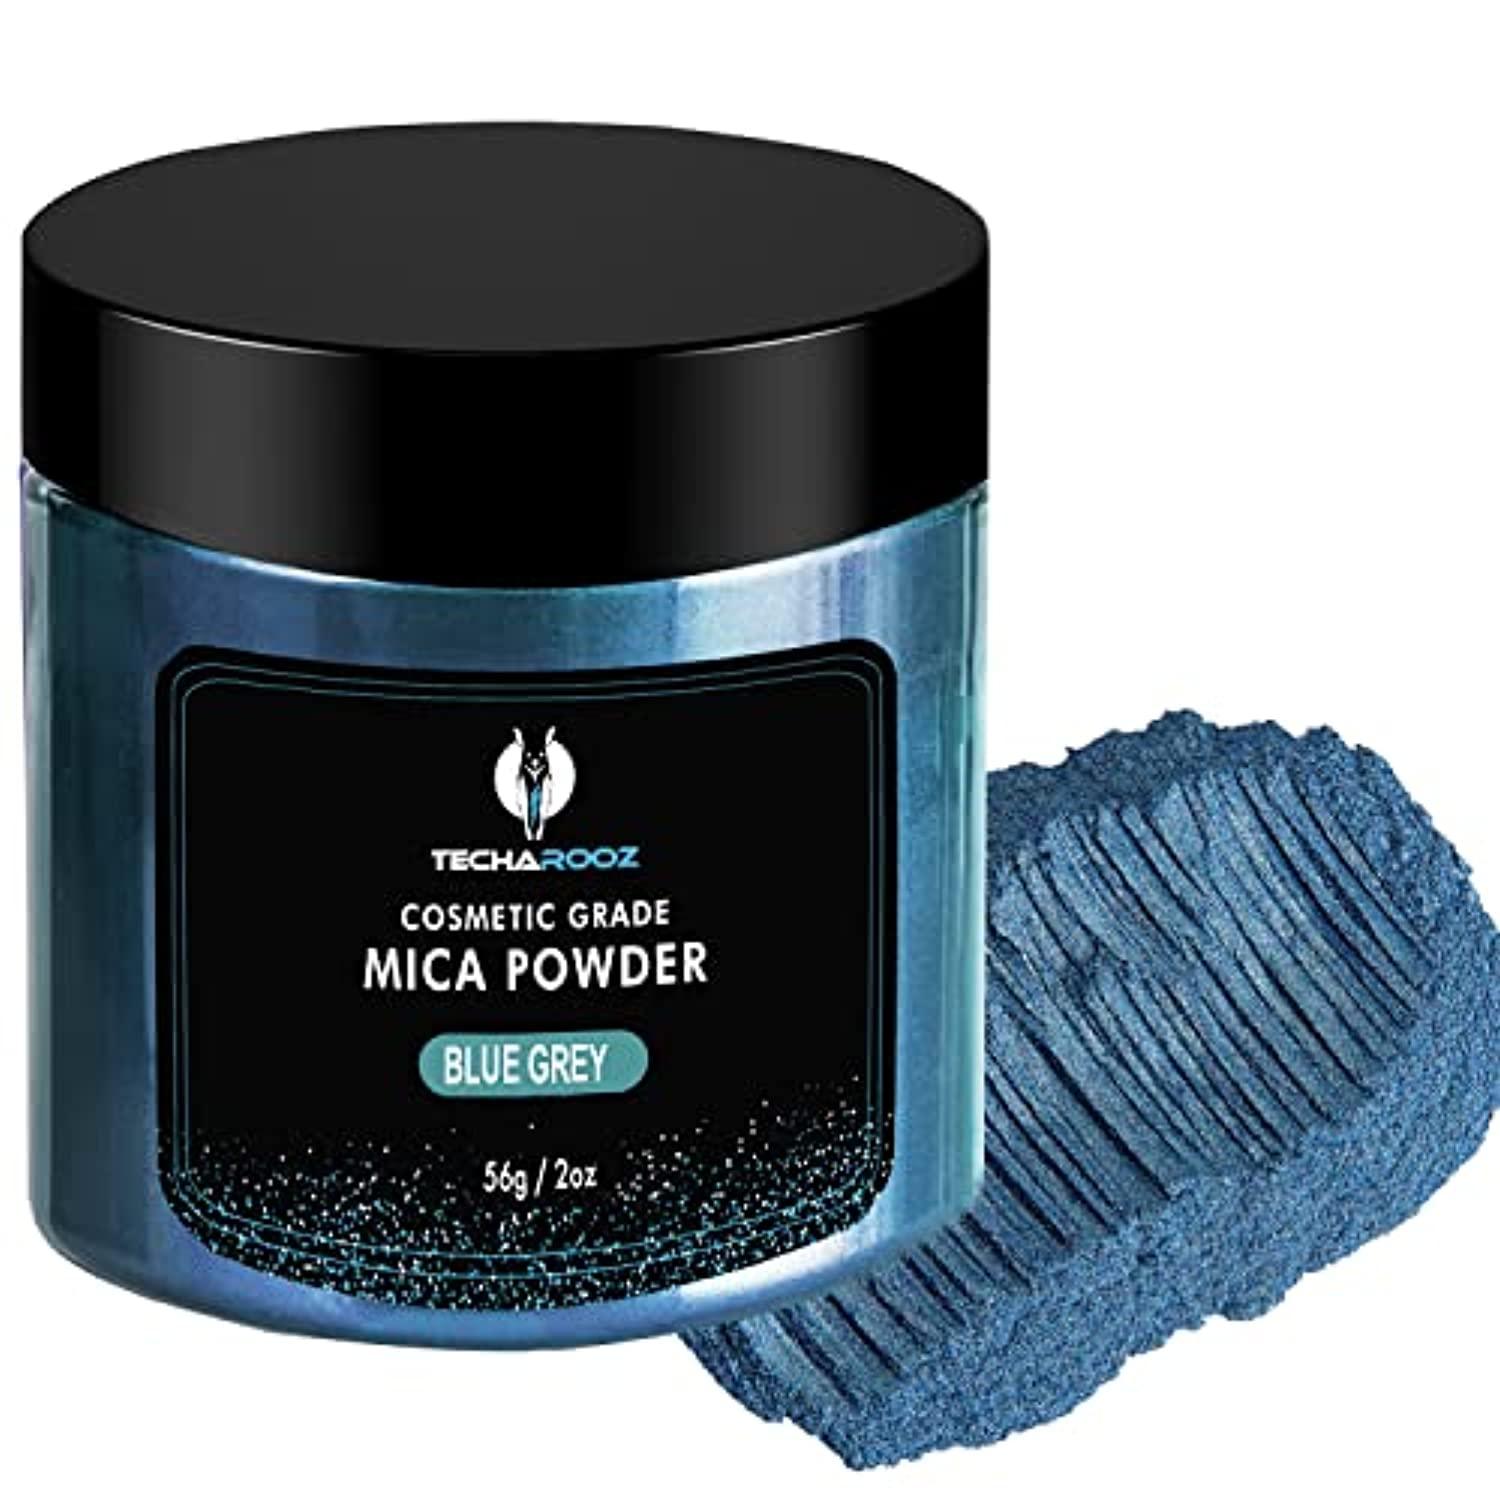 Blue Grey Mica Powder for Epoxy, Soap Making, candles 56g / 2oz. Jar